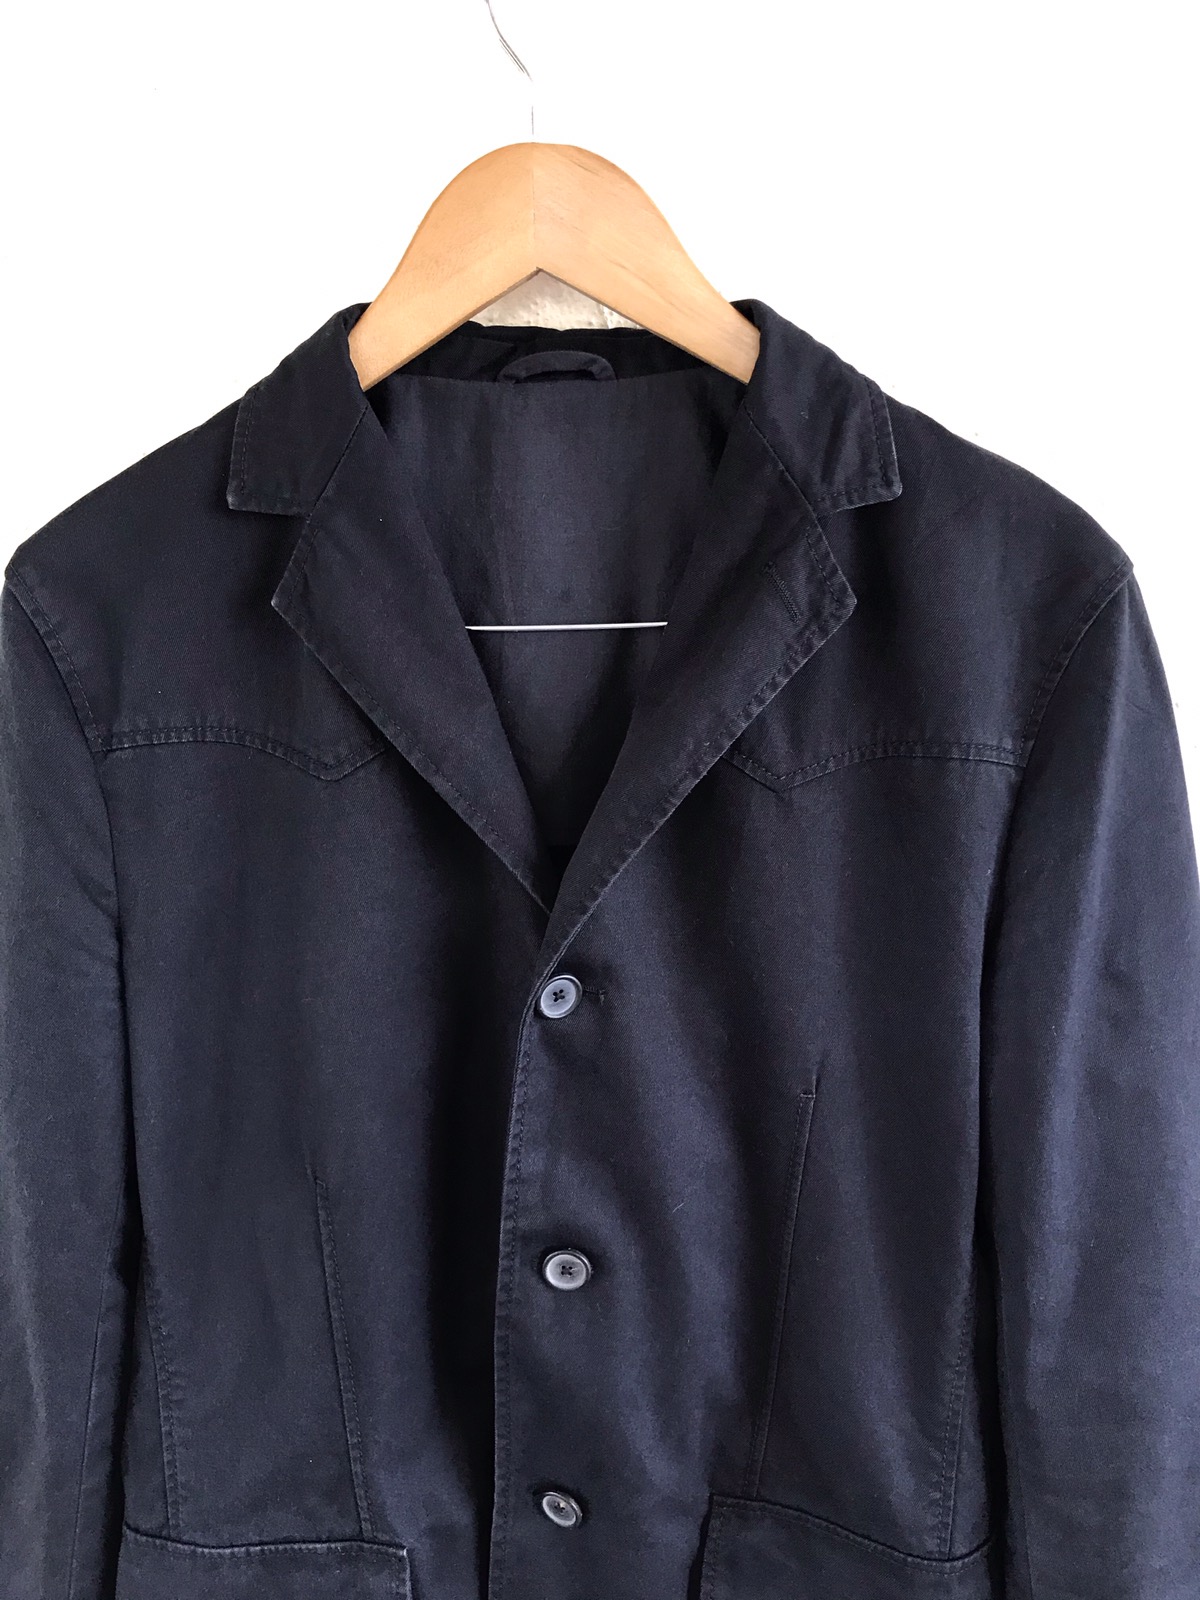 Jil Sander Black Jacket Blazer Made in Italy - 2